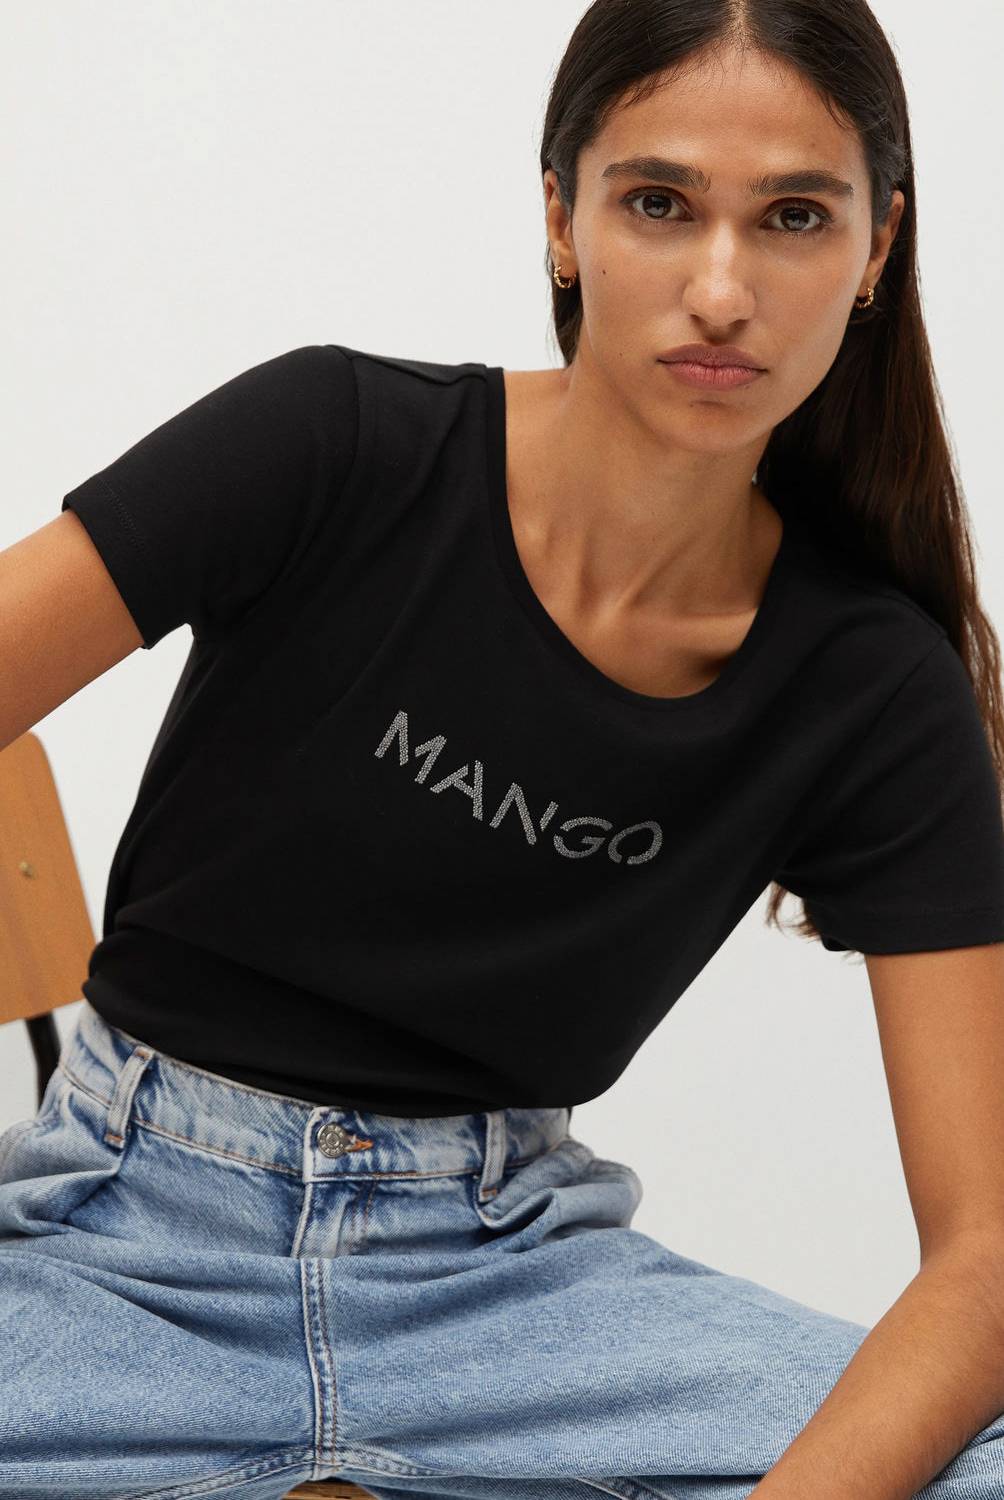 MANGO - Polera Mangologo Algodón Orgánico